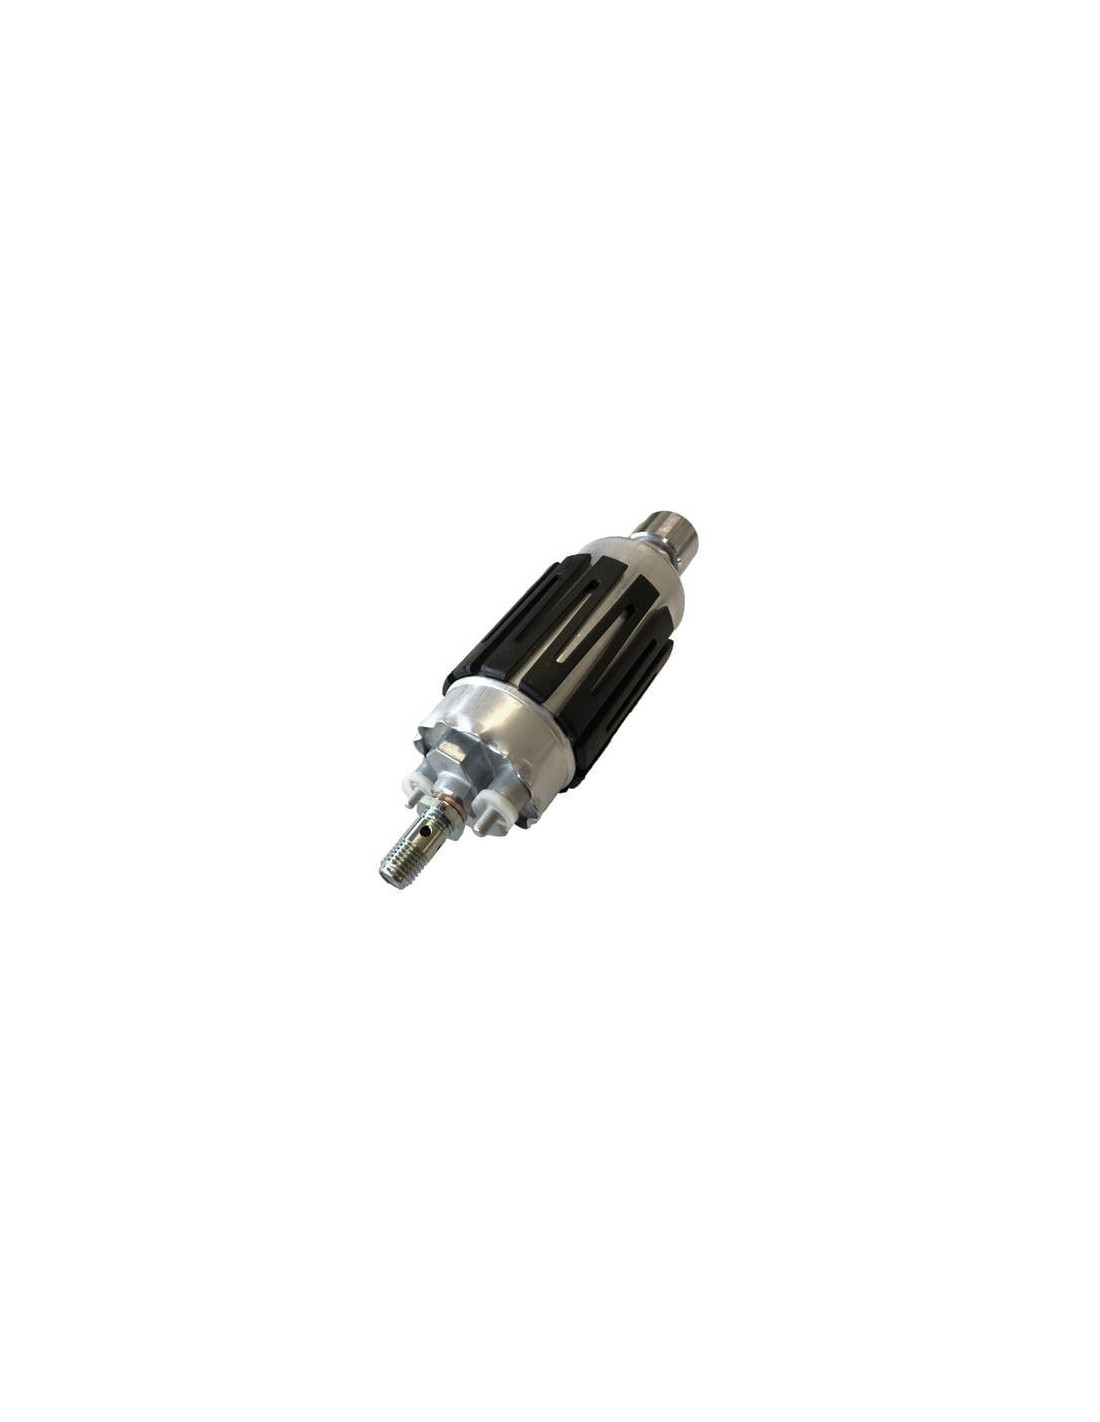 Bosch FP200/7 310 L/h Fuel Pump - replaces 0580254044 044